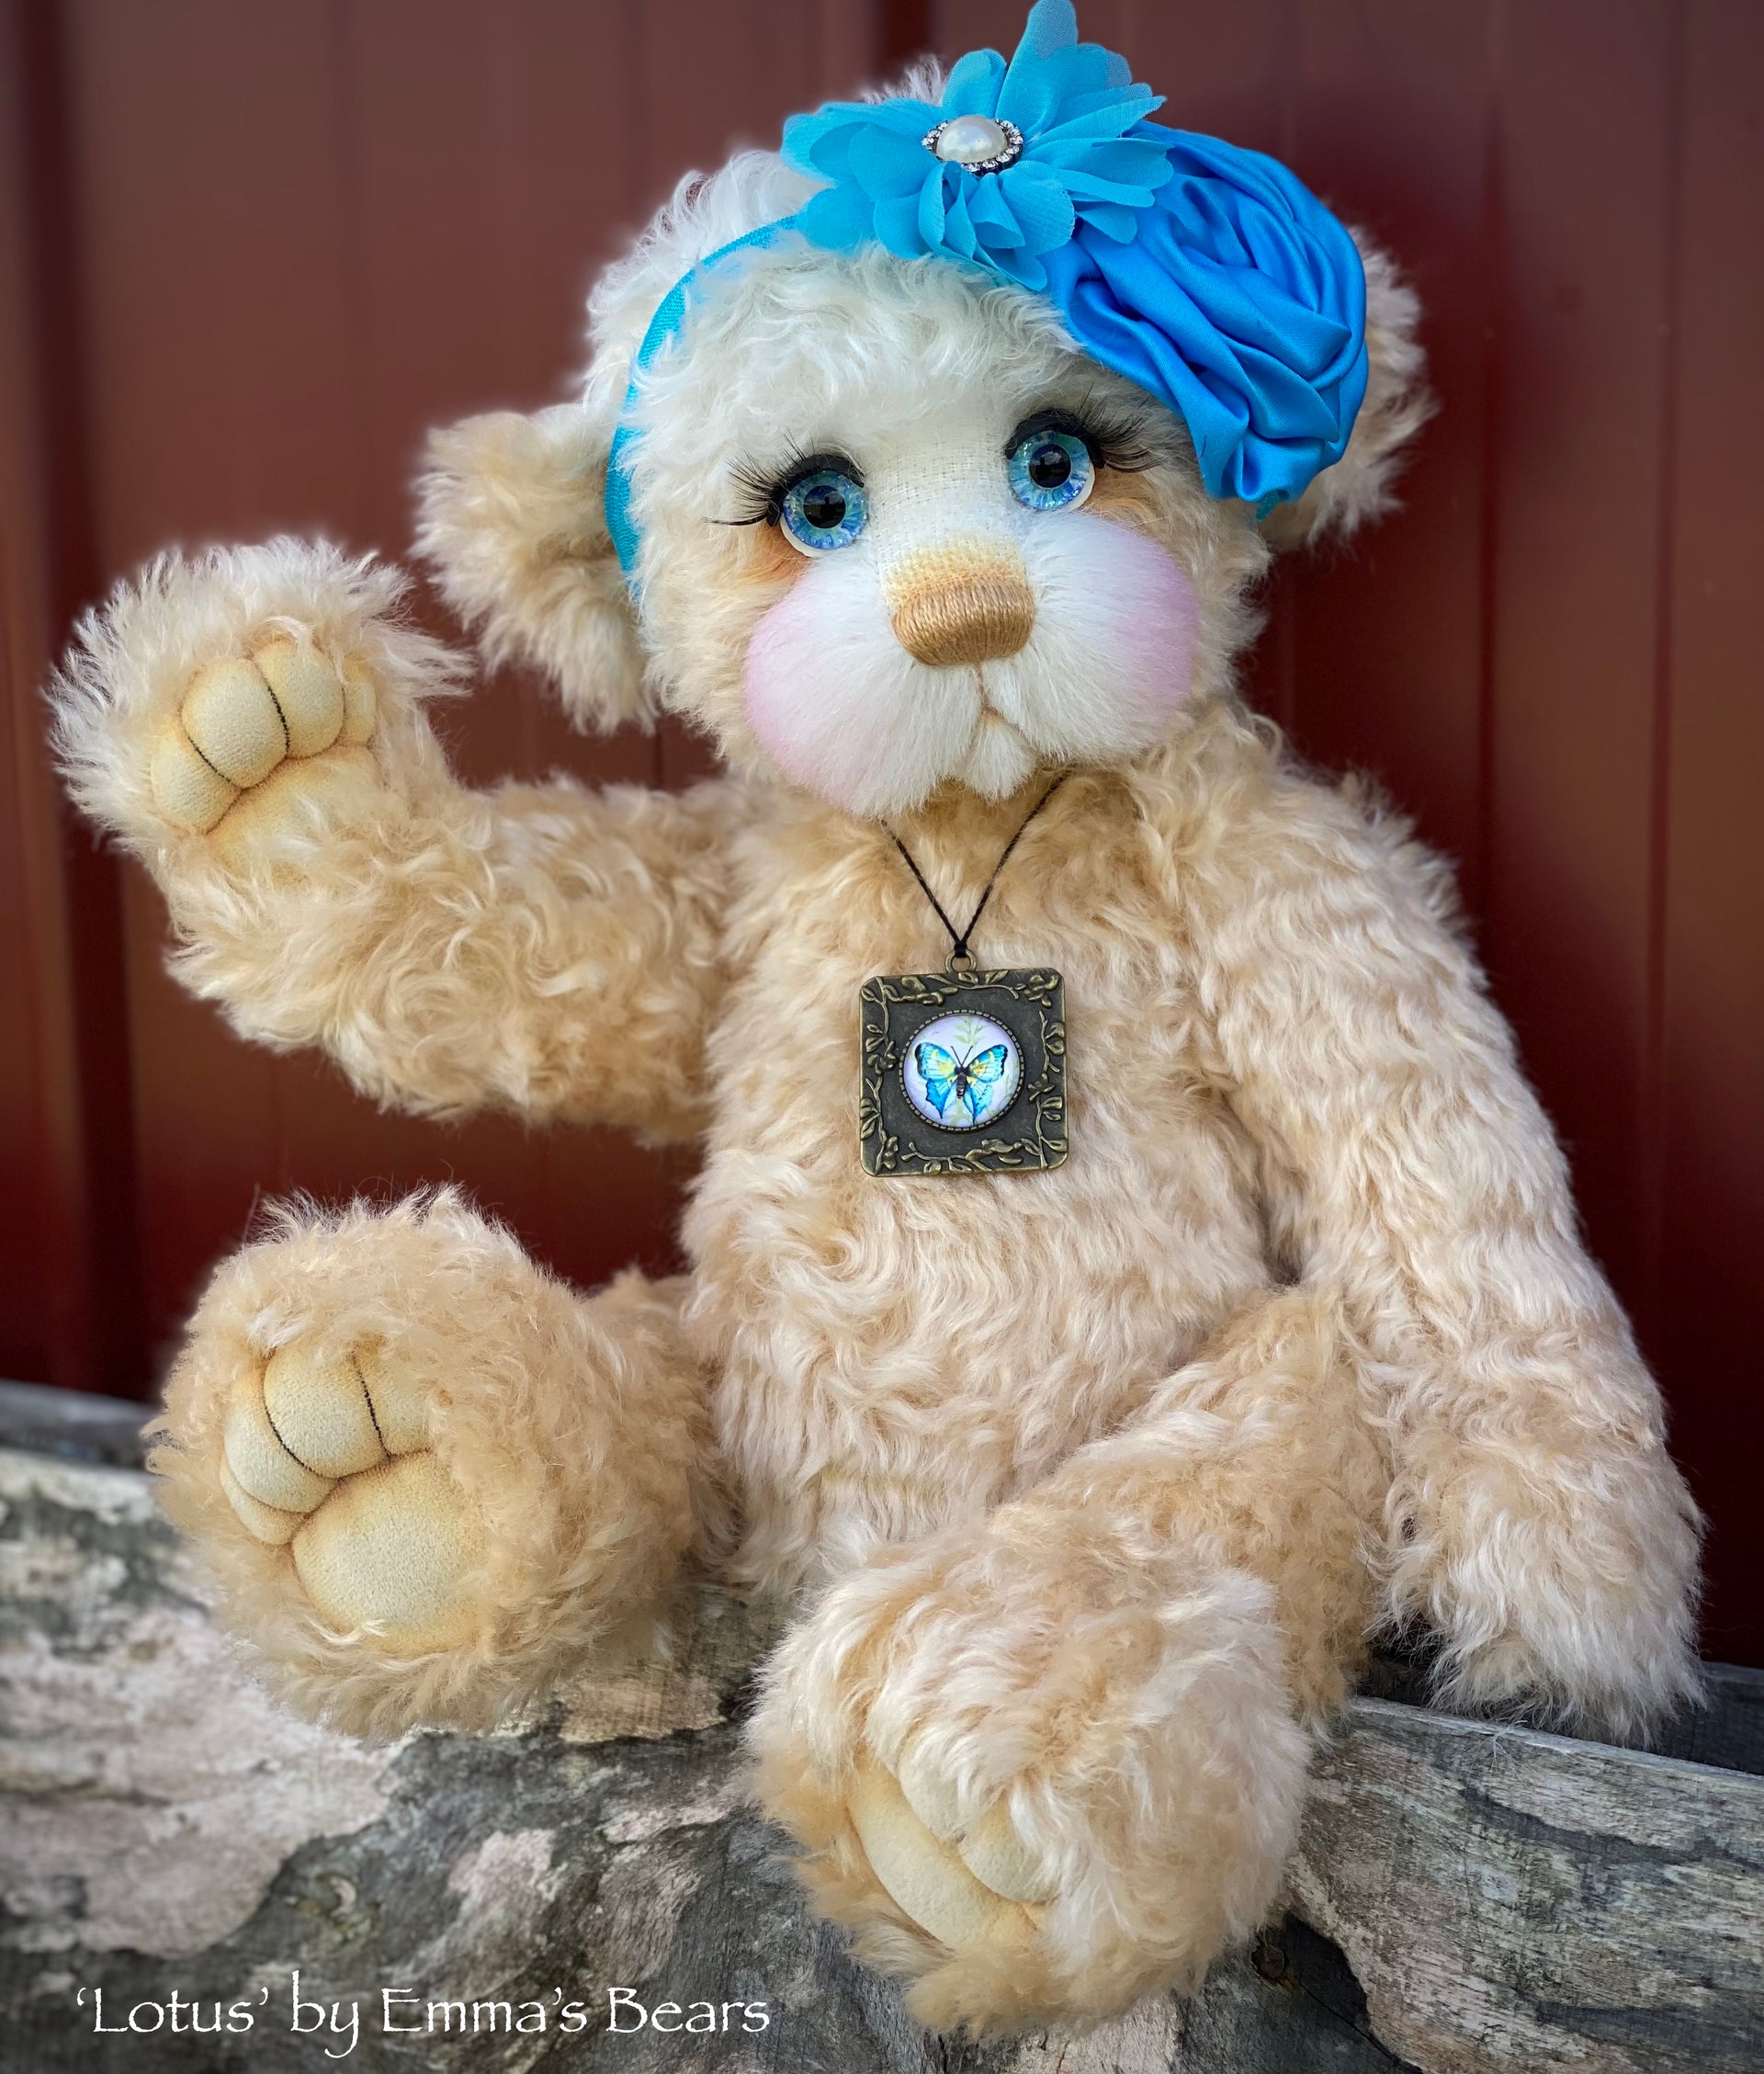 Lotus - 15" Curly Kid Mohair and Alpaca artist bear by Emma's Bears - OOAK